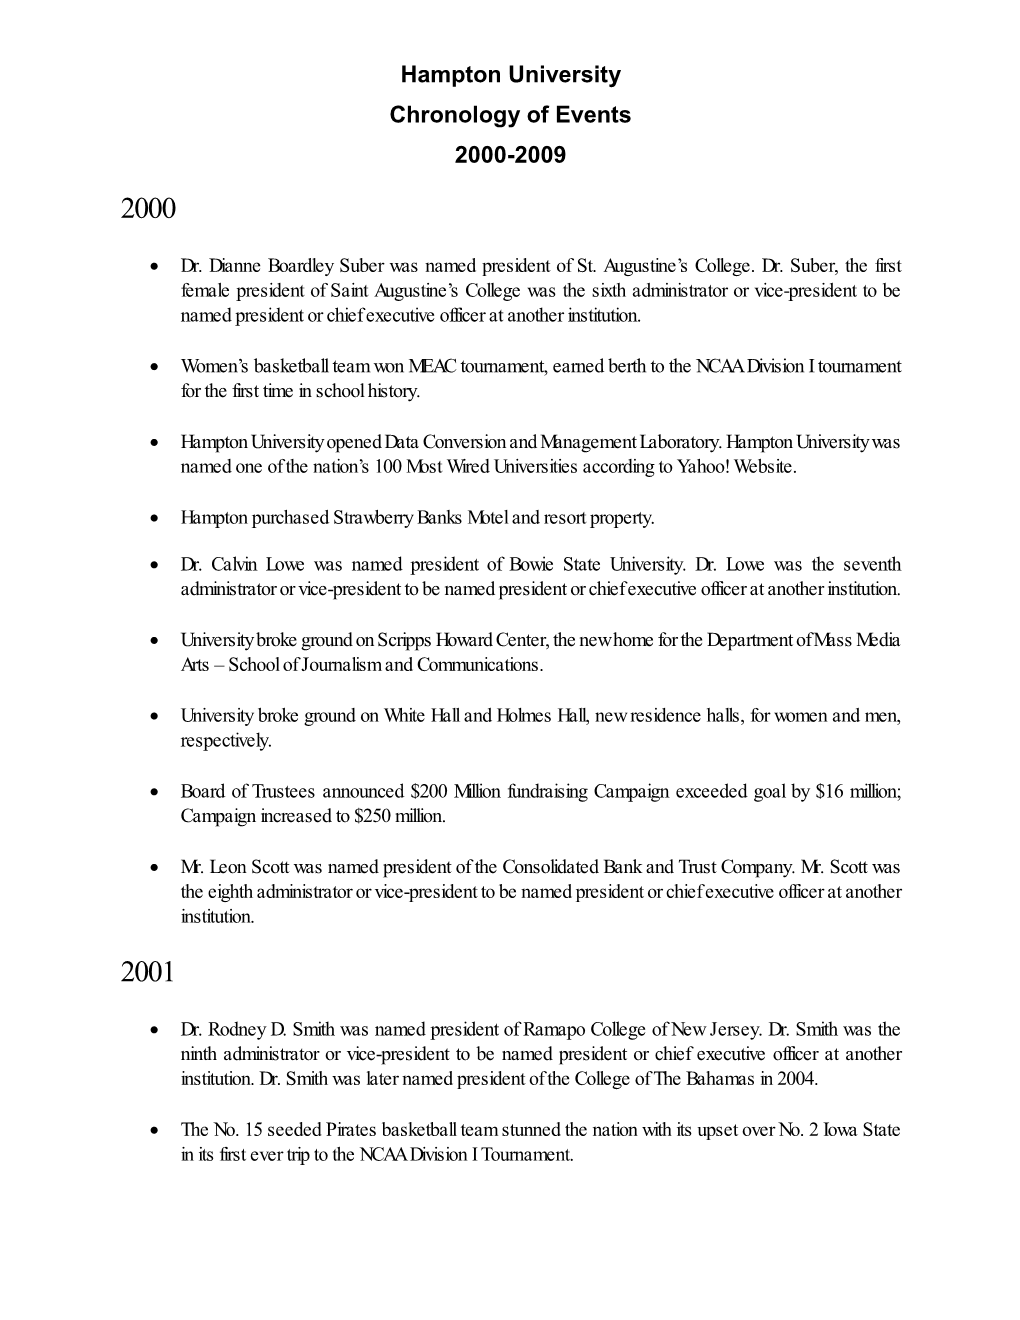 Hampton University Chronology of Events 2000-2009